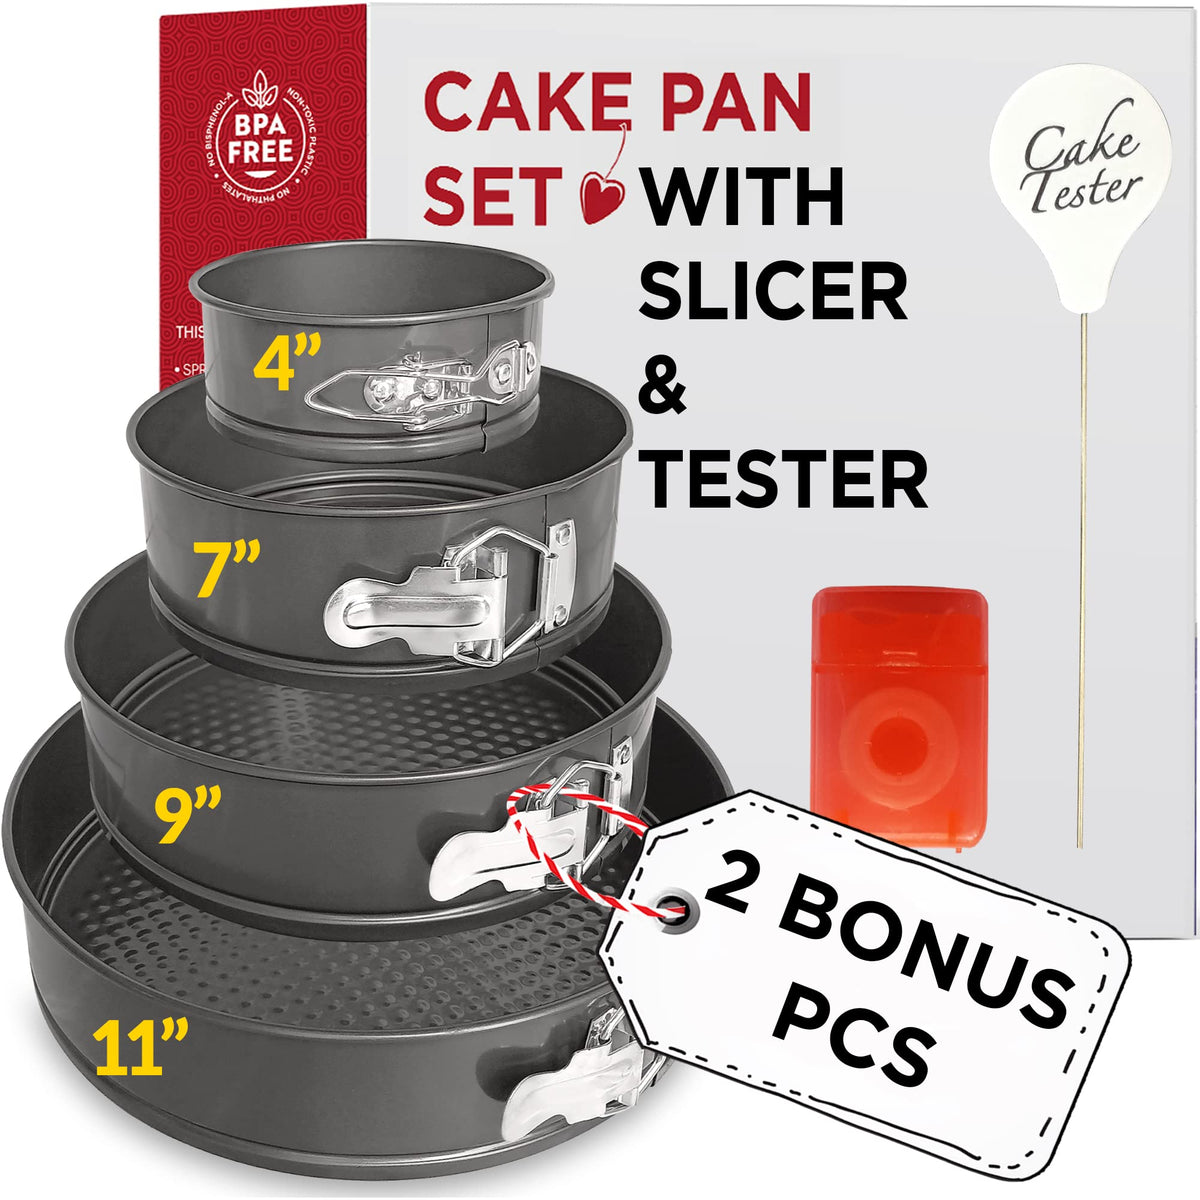 Wilton Springform Cake Pan Set, 3-Piece, 3 Pc, Gray